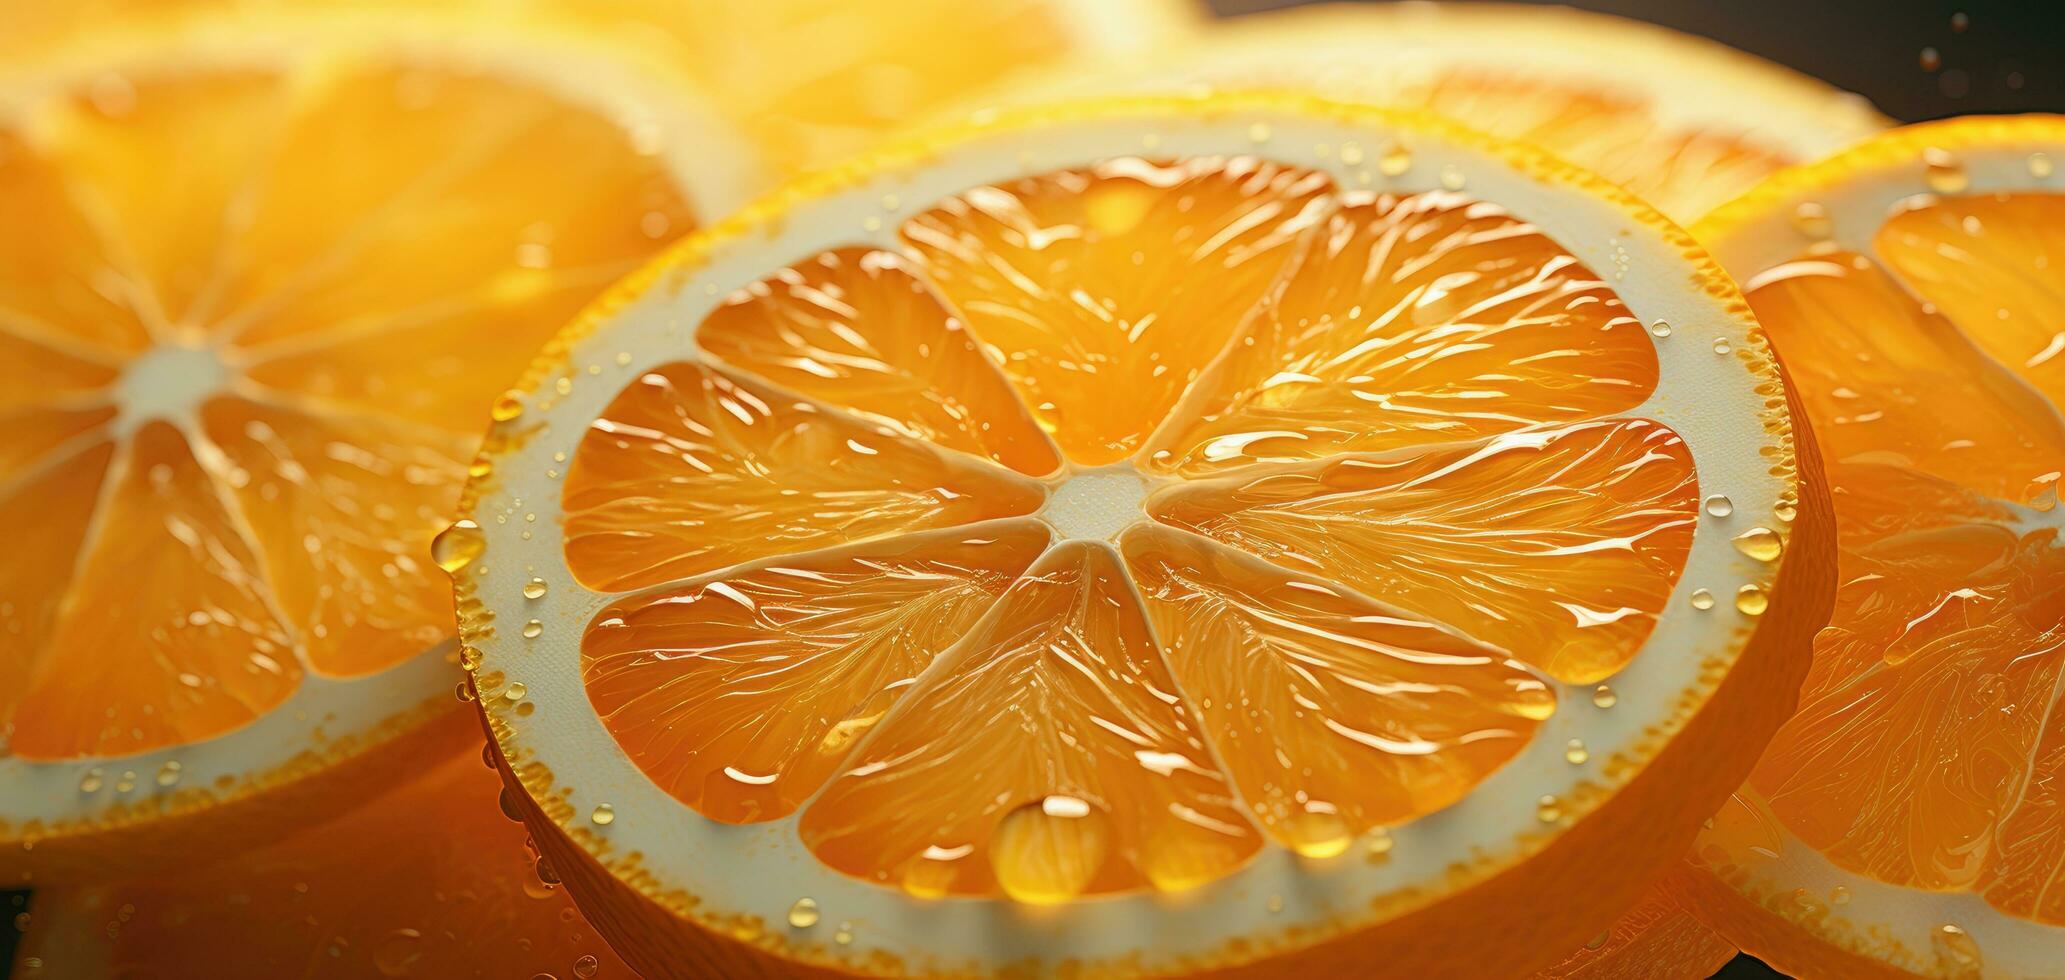 AI generated a close up image of orange slices photo